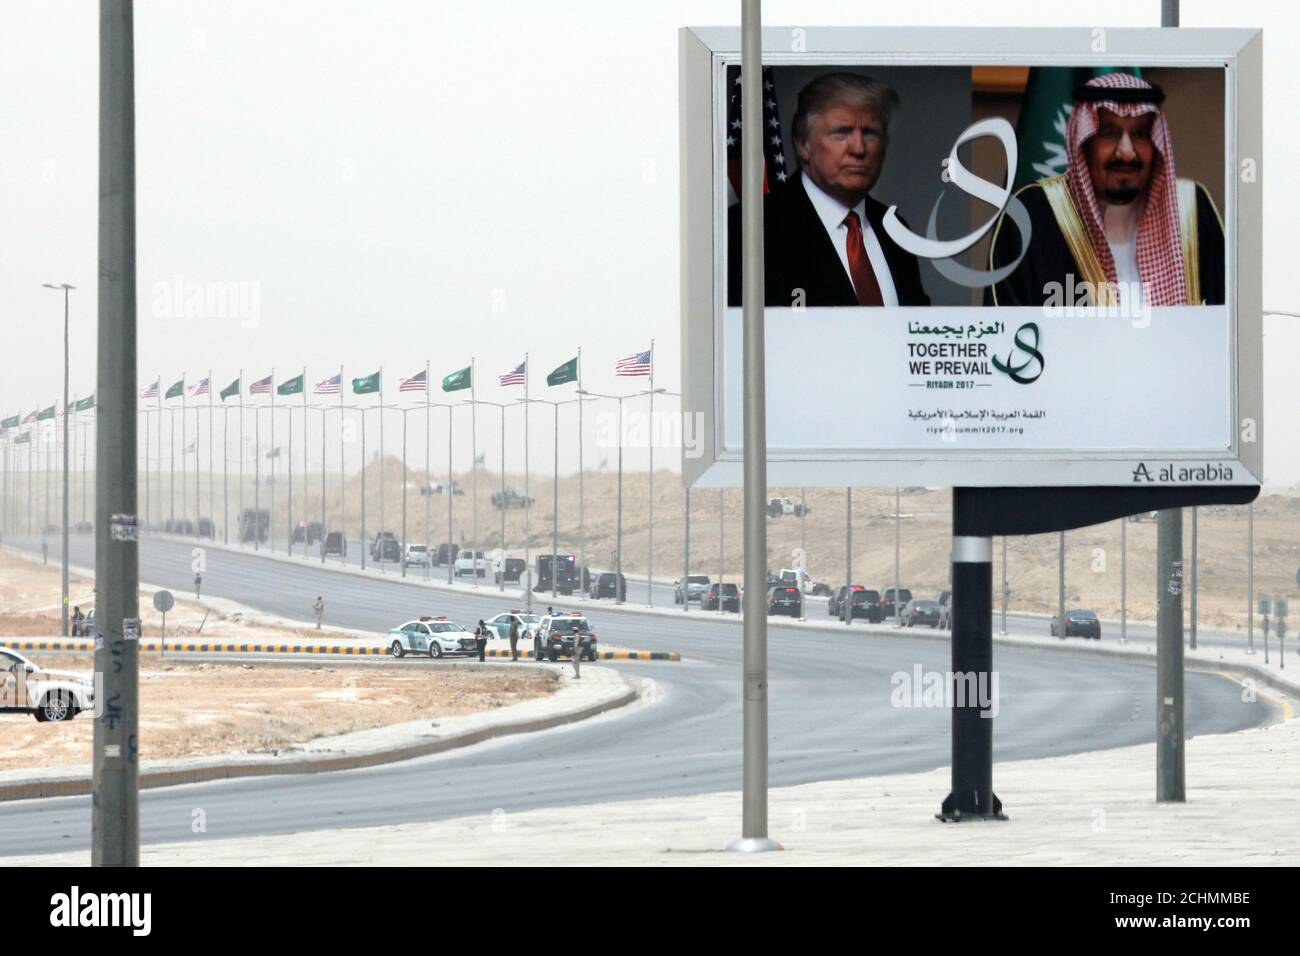 U.S. President Donald Trump's motorcade passes a billboard advertising his visit with Saudi Arabia's King Salman bin Abdulaziz Al Saud upon his arrival in Riyadh, Saudi Arabia May 20, 2017. REUTERS/Jonathan Ernst Stock Photo